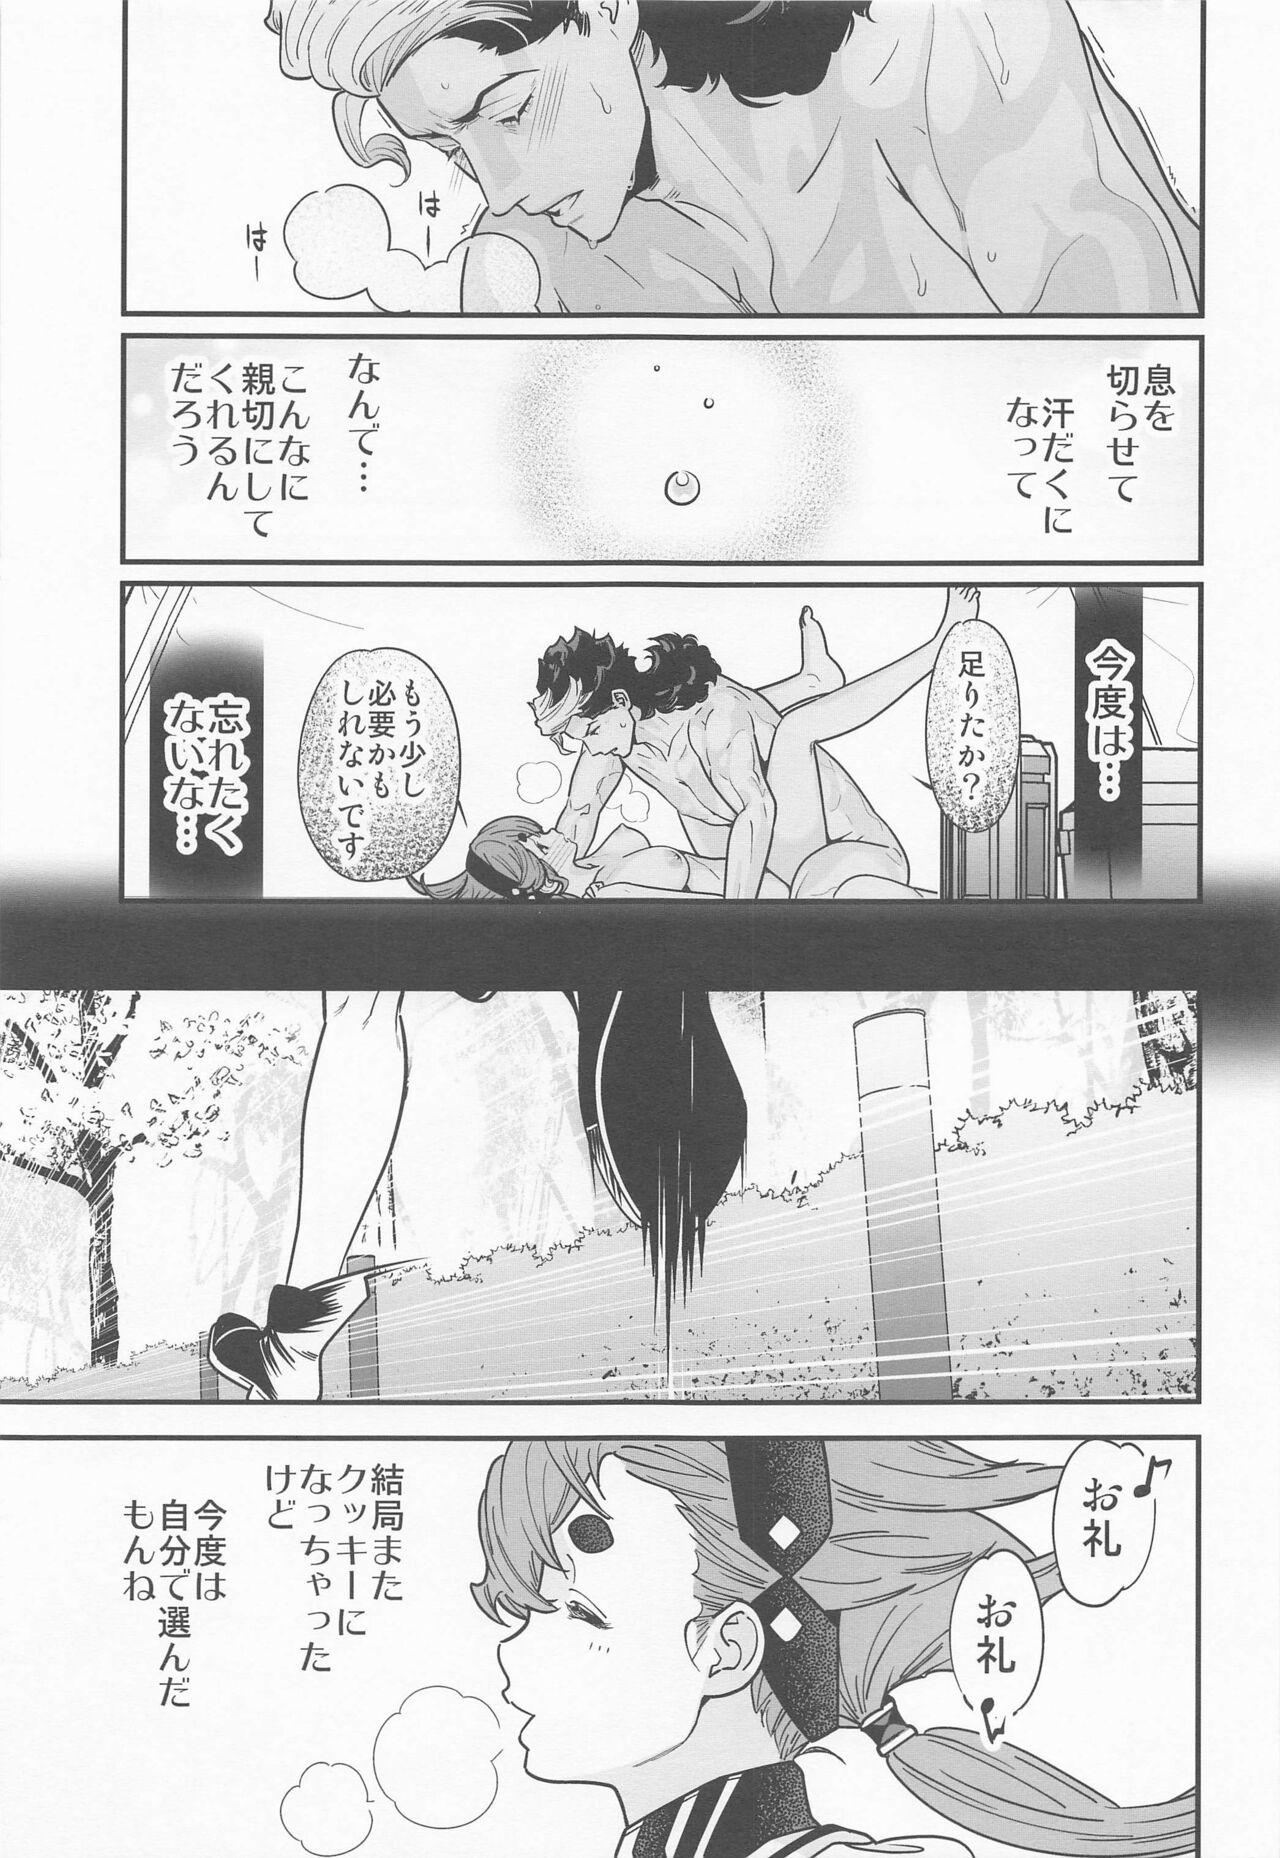 Pawg Shittemasu! Oyakusoku tte Kurikaesun desu yo ne! - Mobile suit gundam the witch from mercury 3way - Page 24